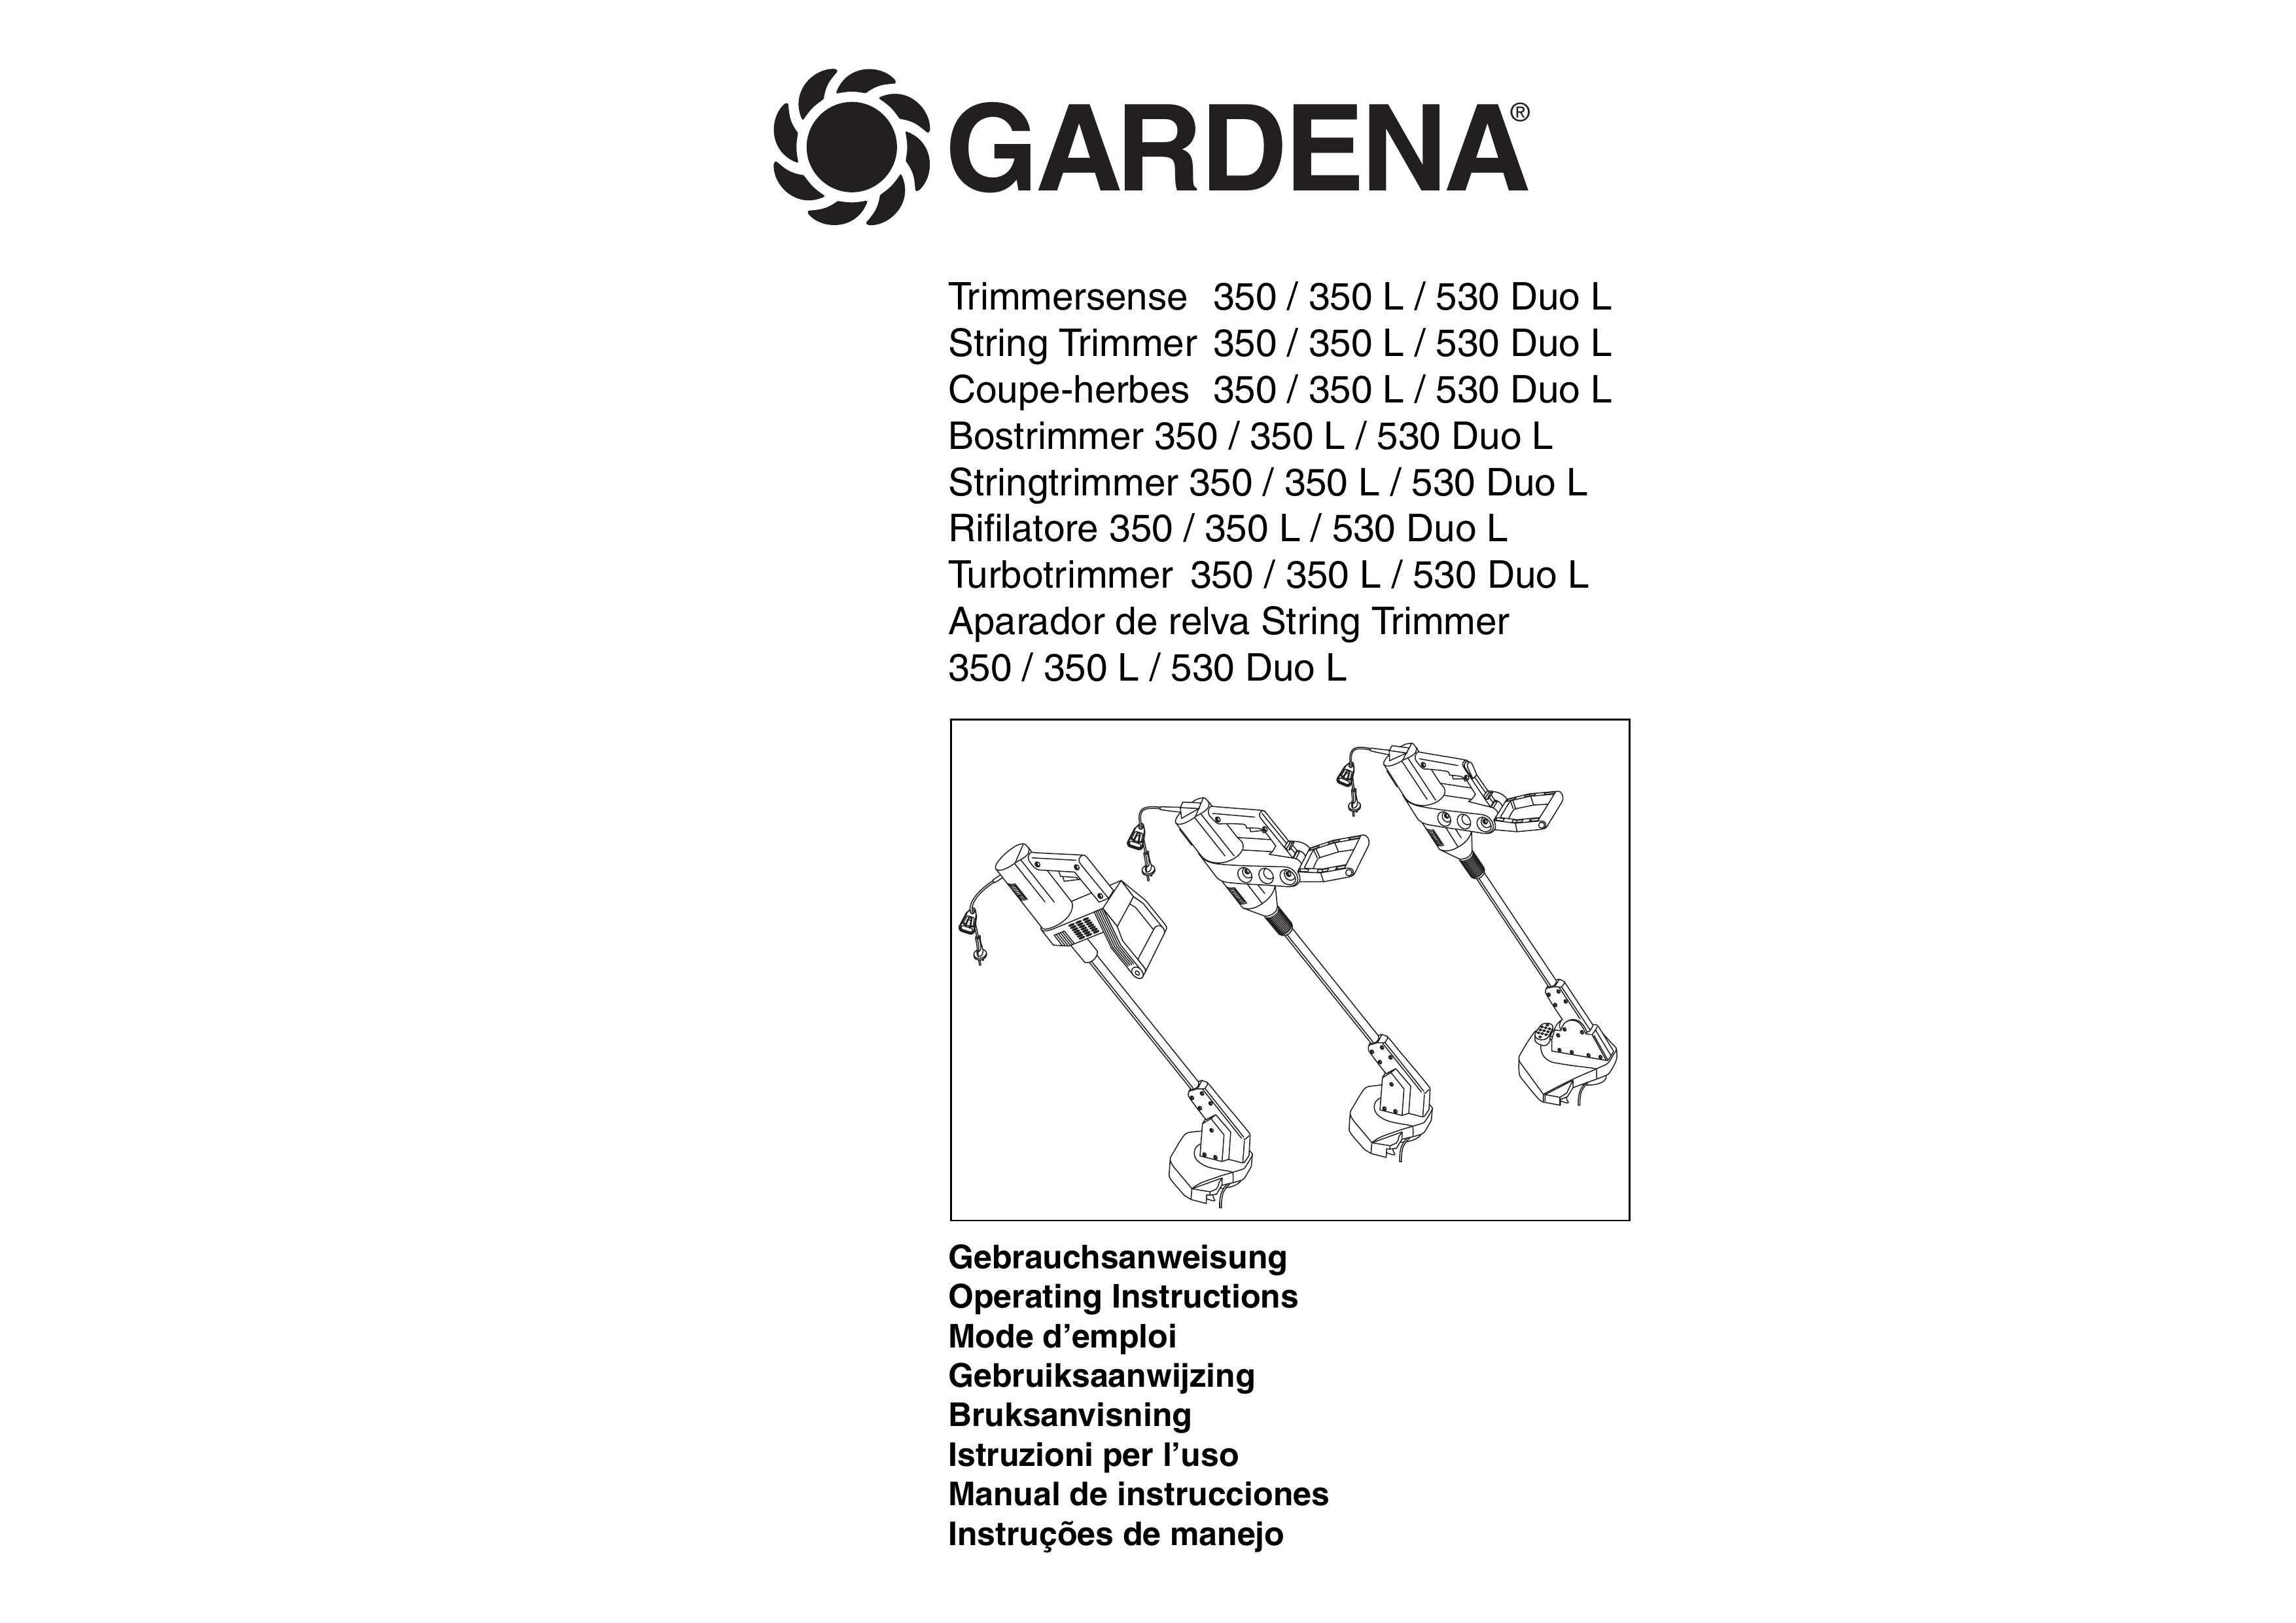 Gardena 350 L Edger User Manual